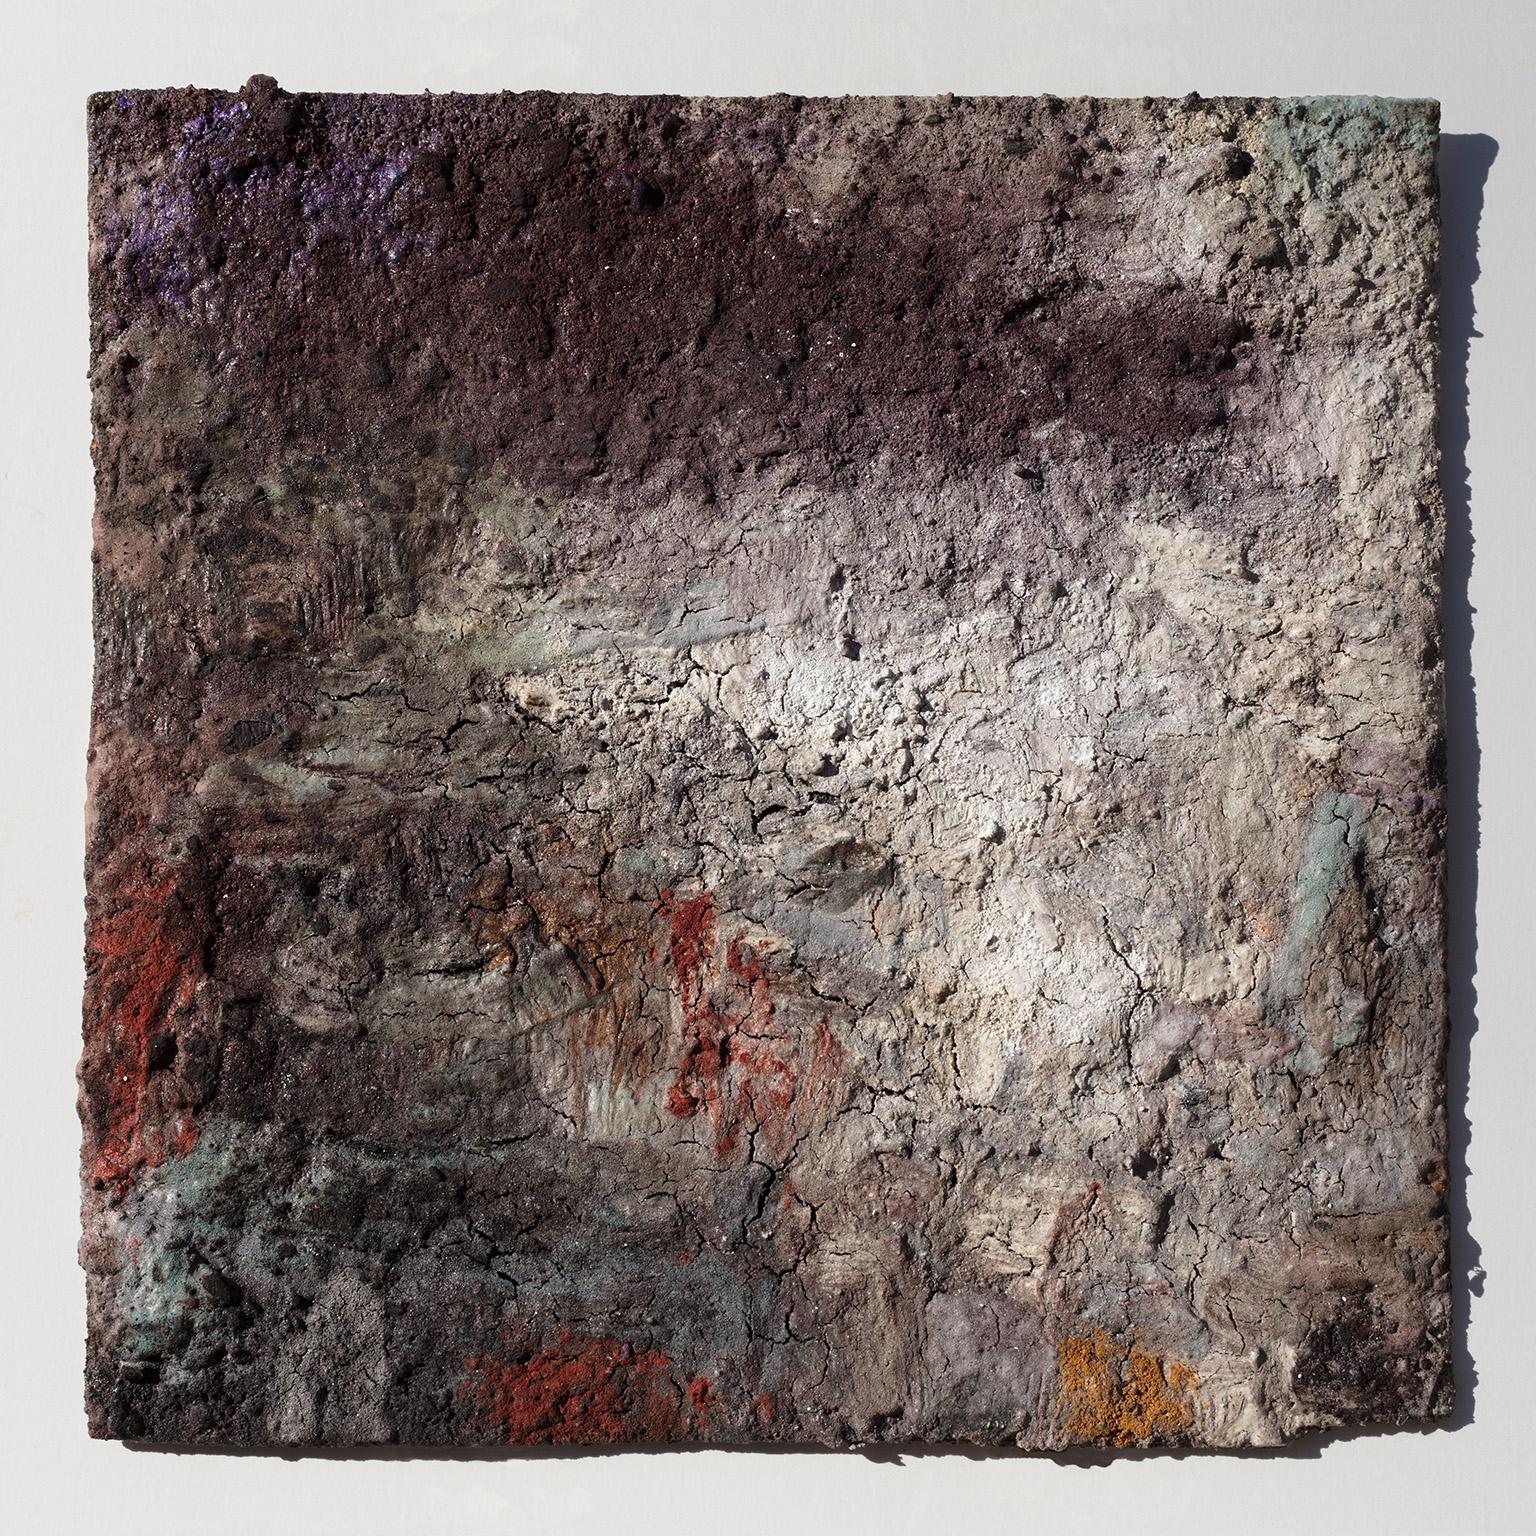 Terra Bruciata (Scorched Earth) # - Small Abstract Painting - Mixed Media Art by Orazio De Gennaro